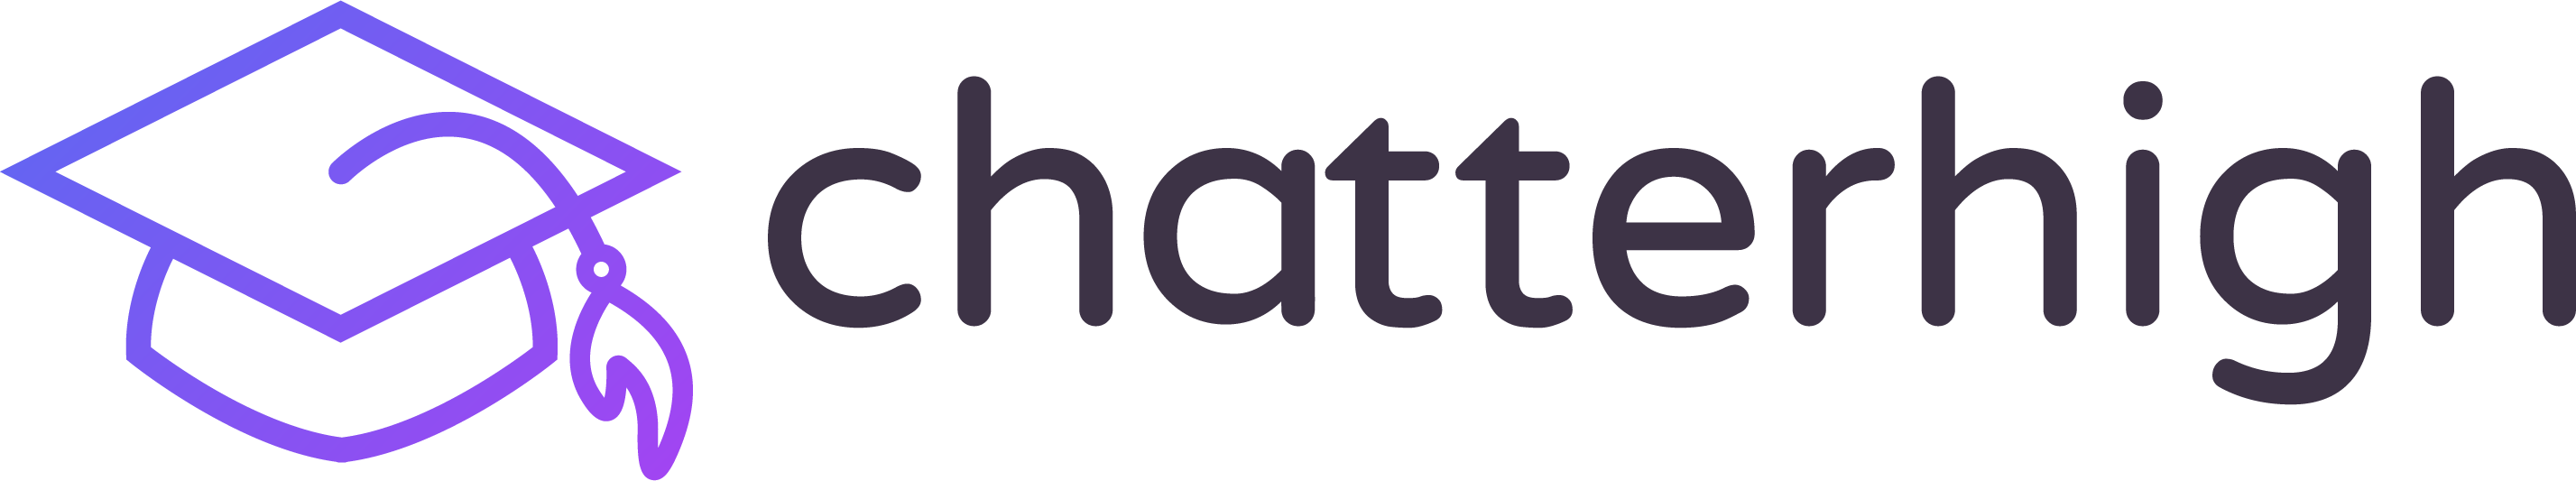 Chatterhigh Logo png